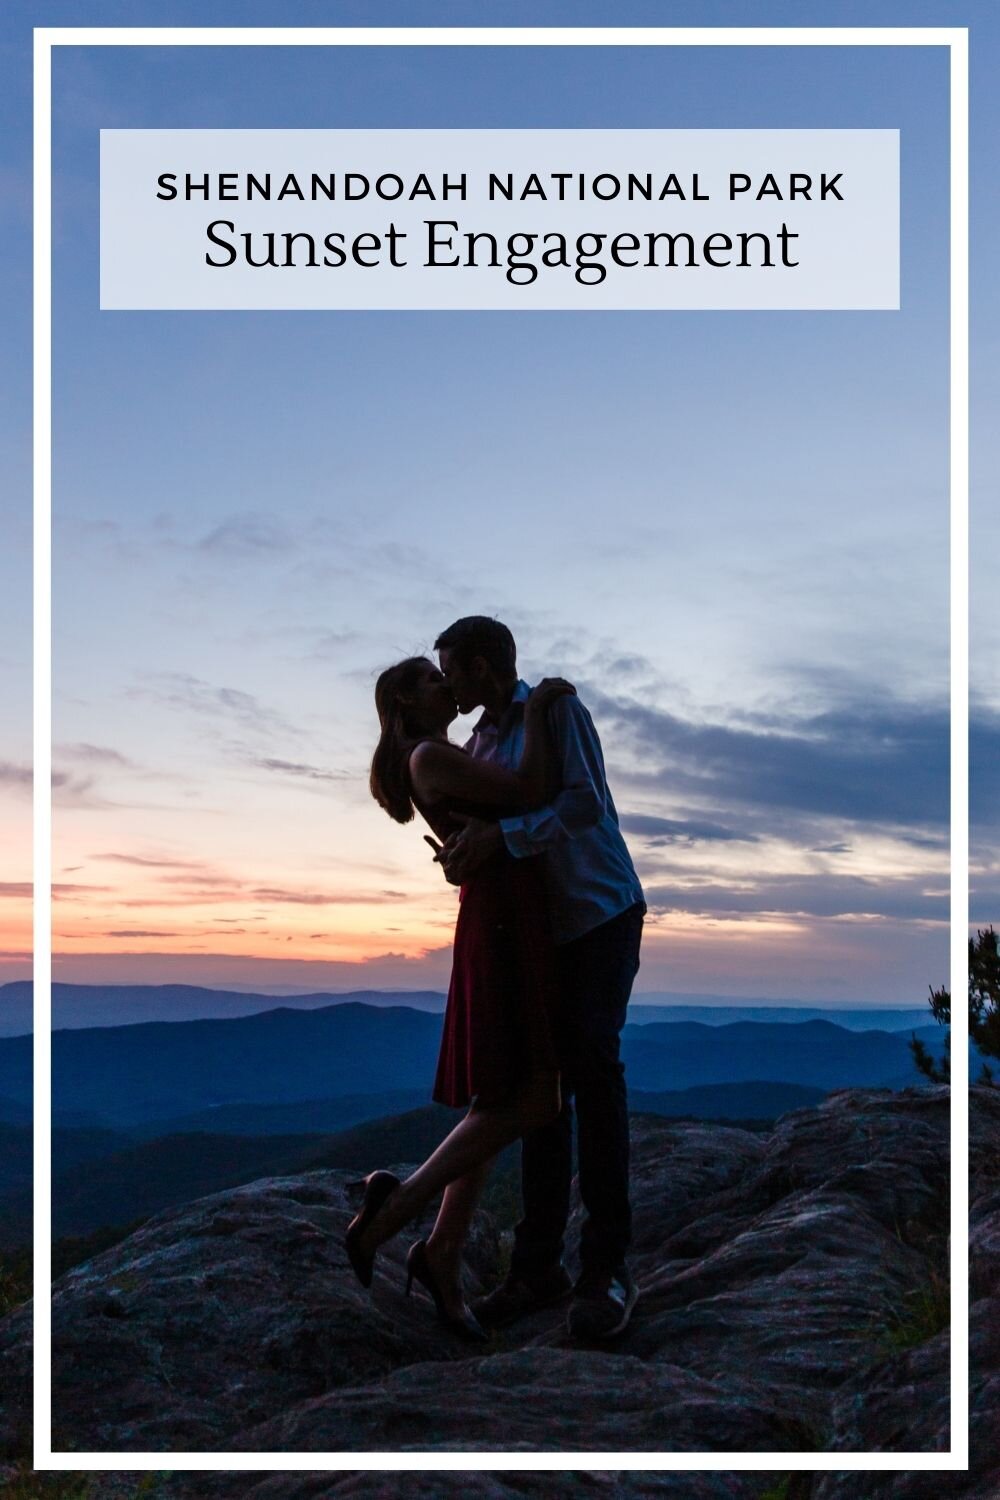 shenandoah sunset engagement 1.jpg